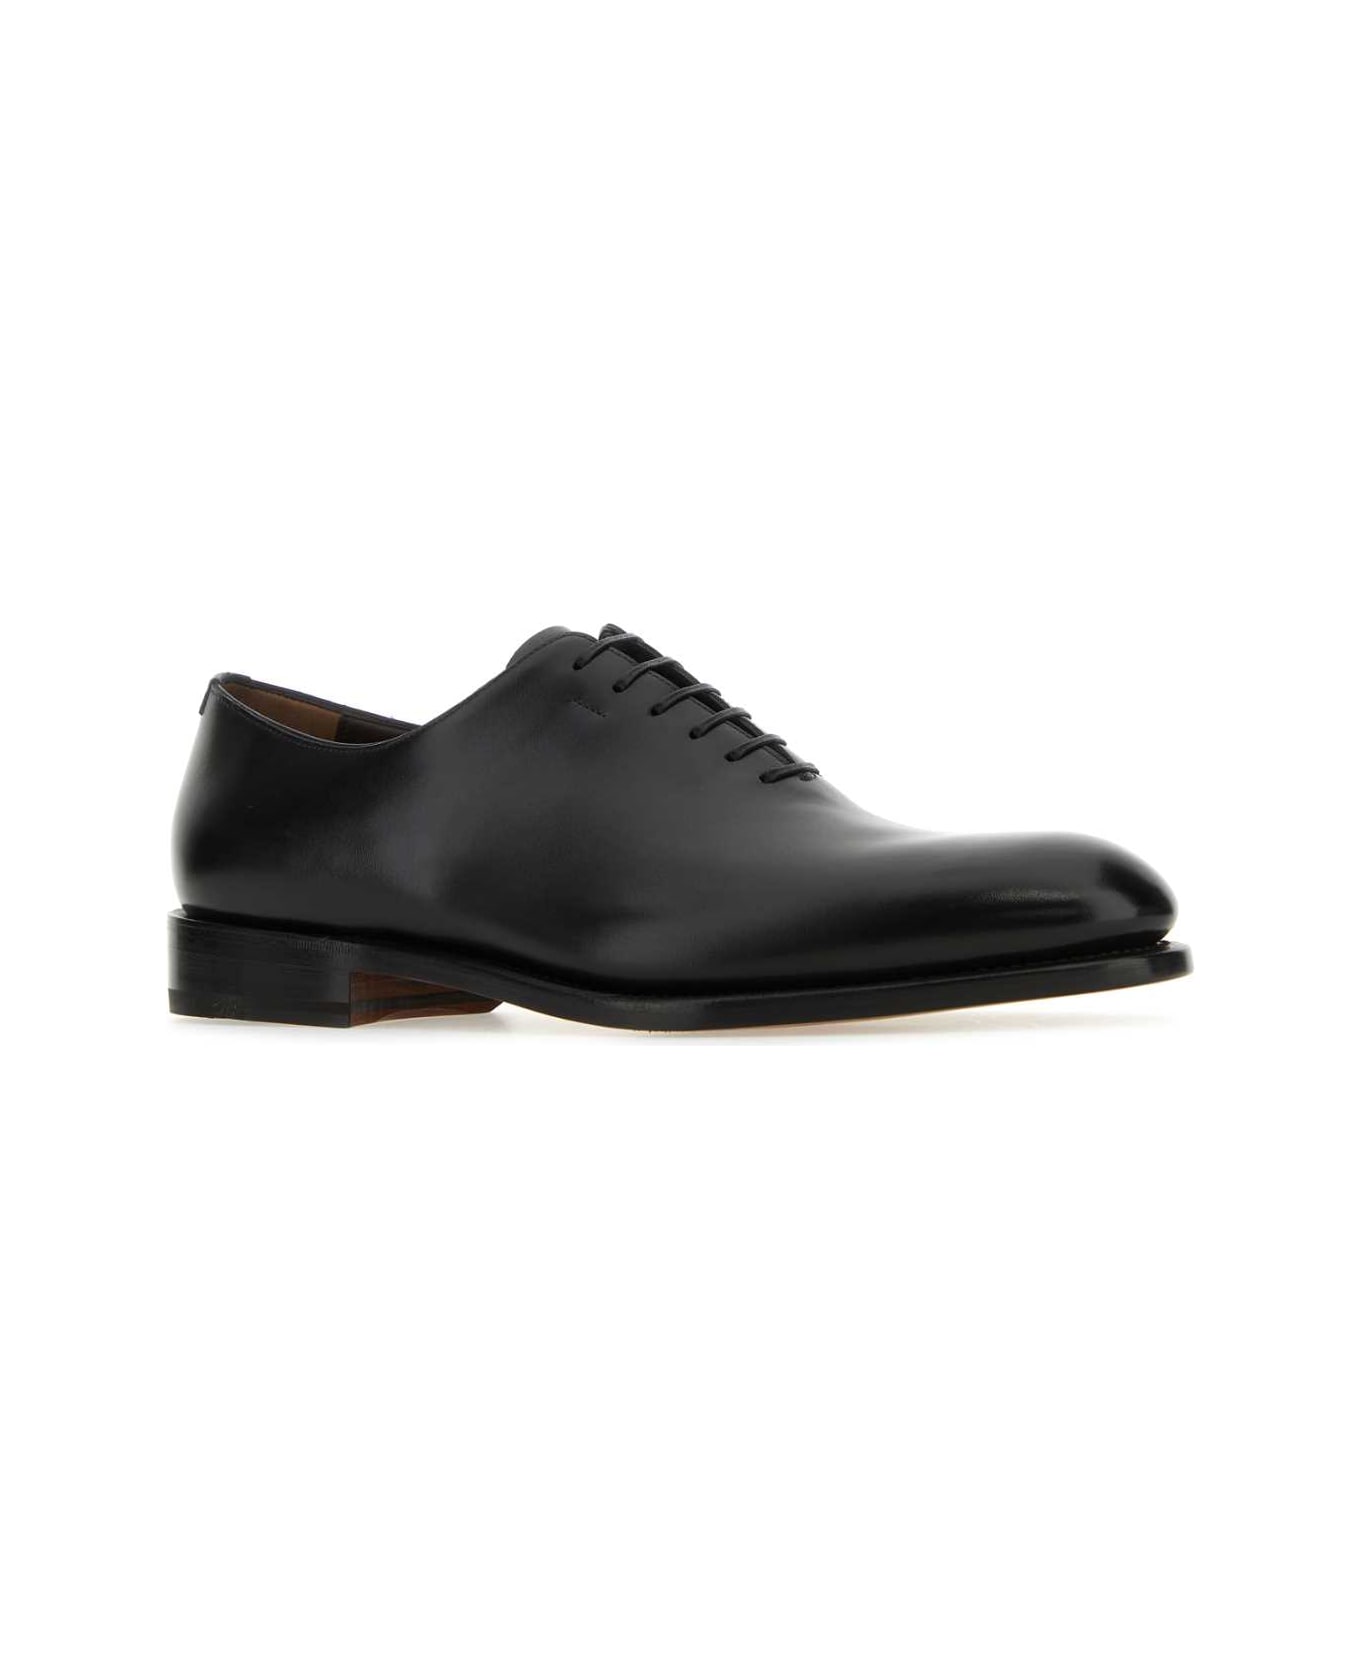 Ferragamo Black Leather Angiolo Lace-up Shoes - NERONERO レースアップシューズ